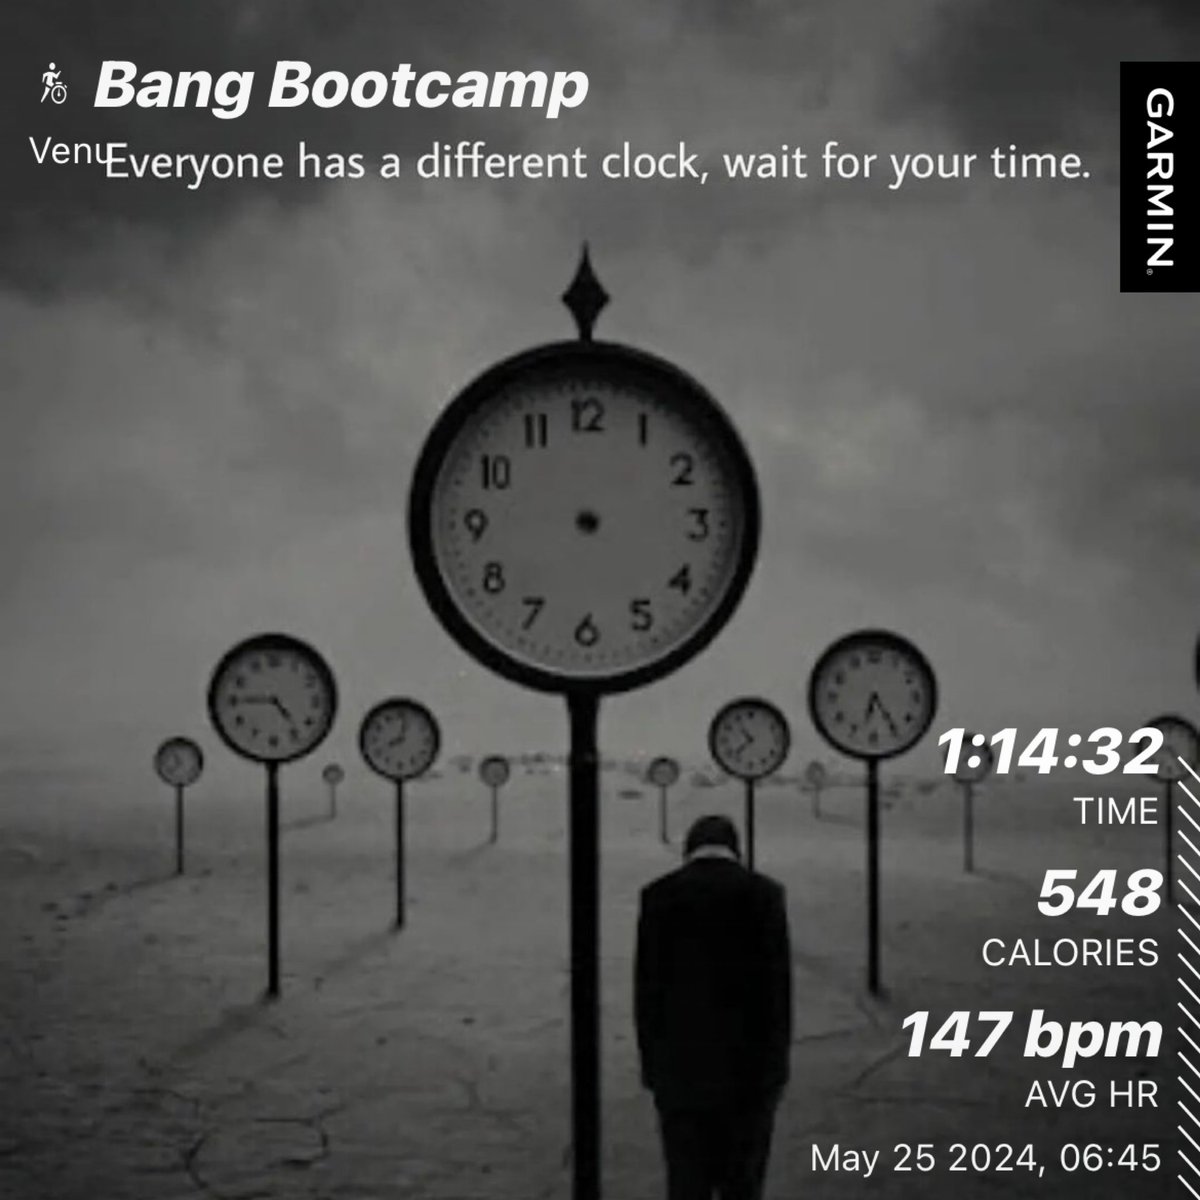 Bootcamp ✅ #MevsMe #BK44 #FitnessBang2024 #FetchYourBody2024